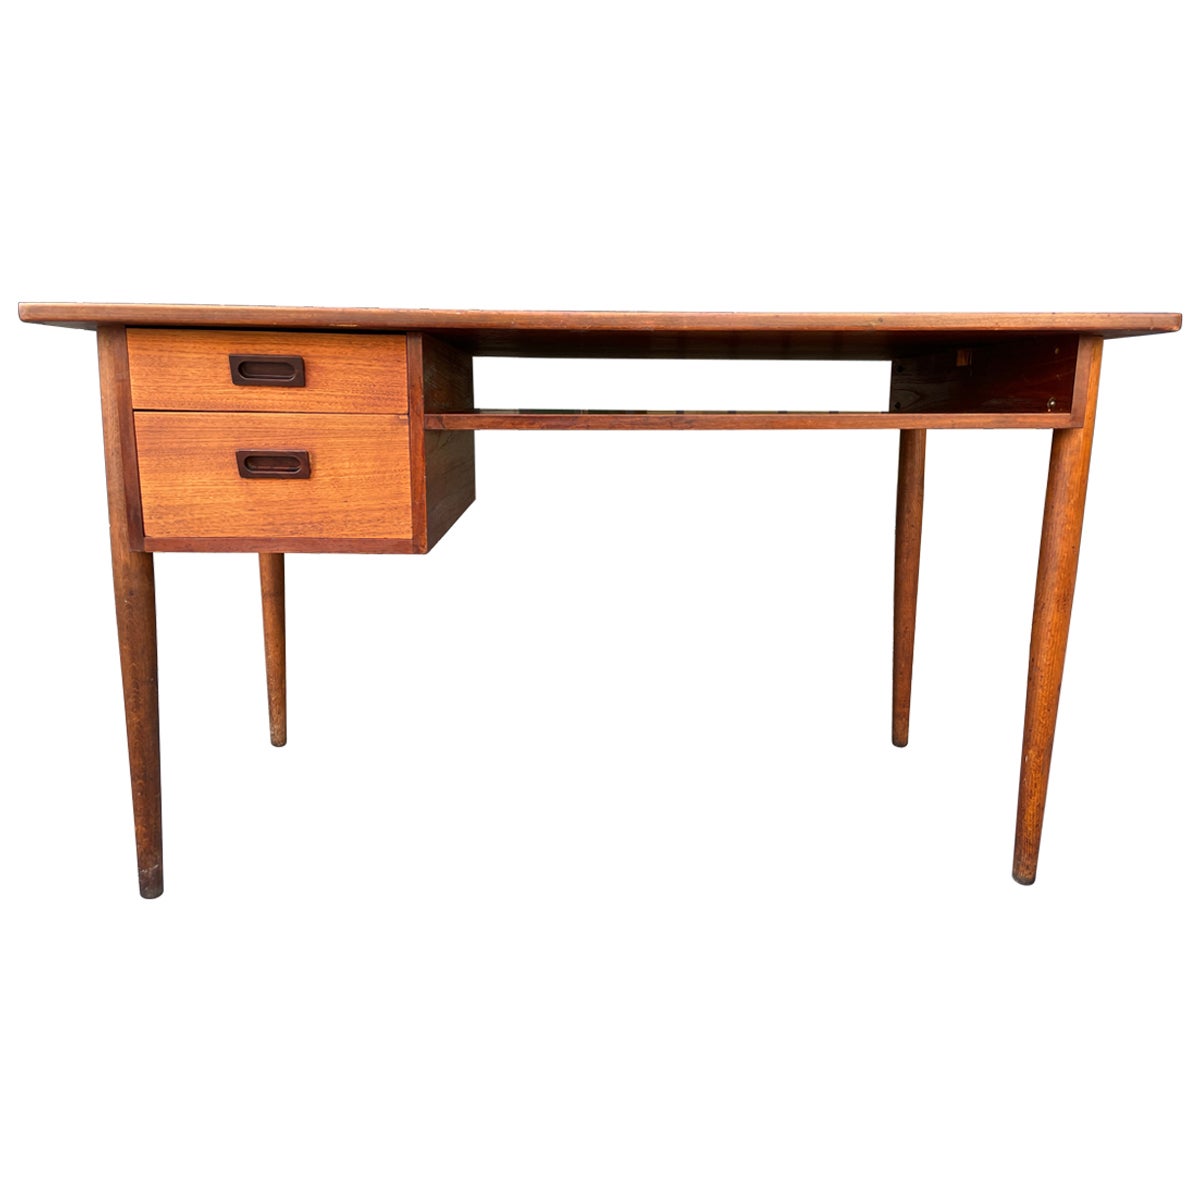 Midcentury Danish Modern Teak Desk 2 Drawers